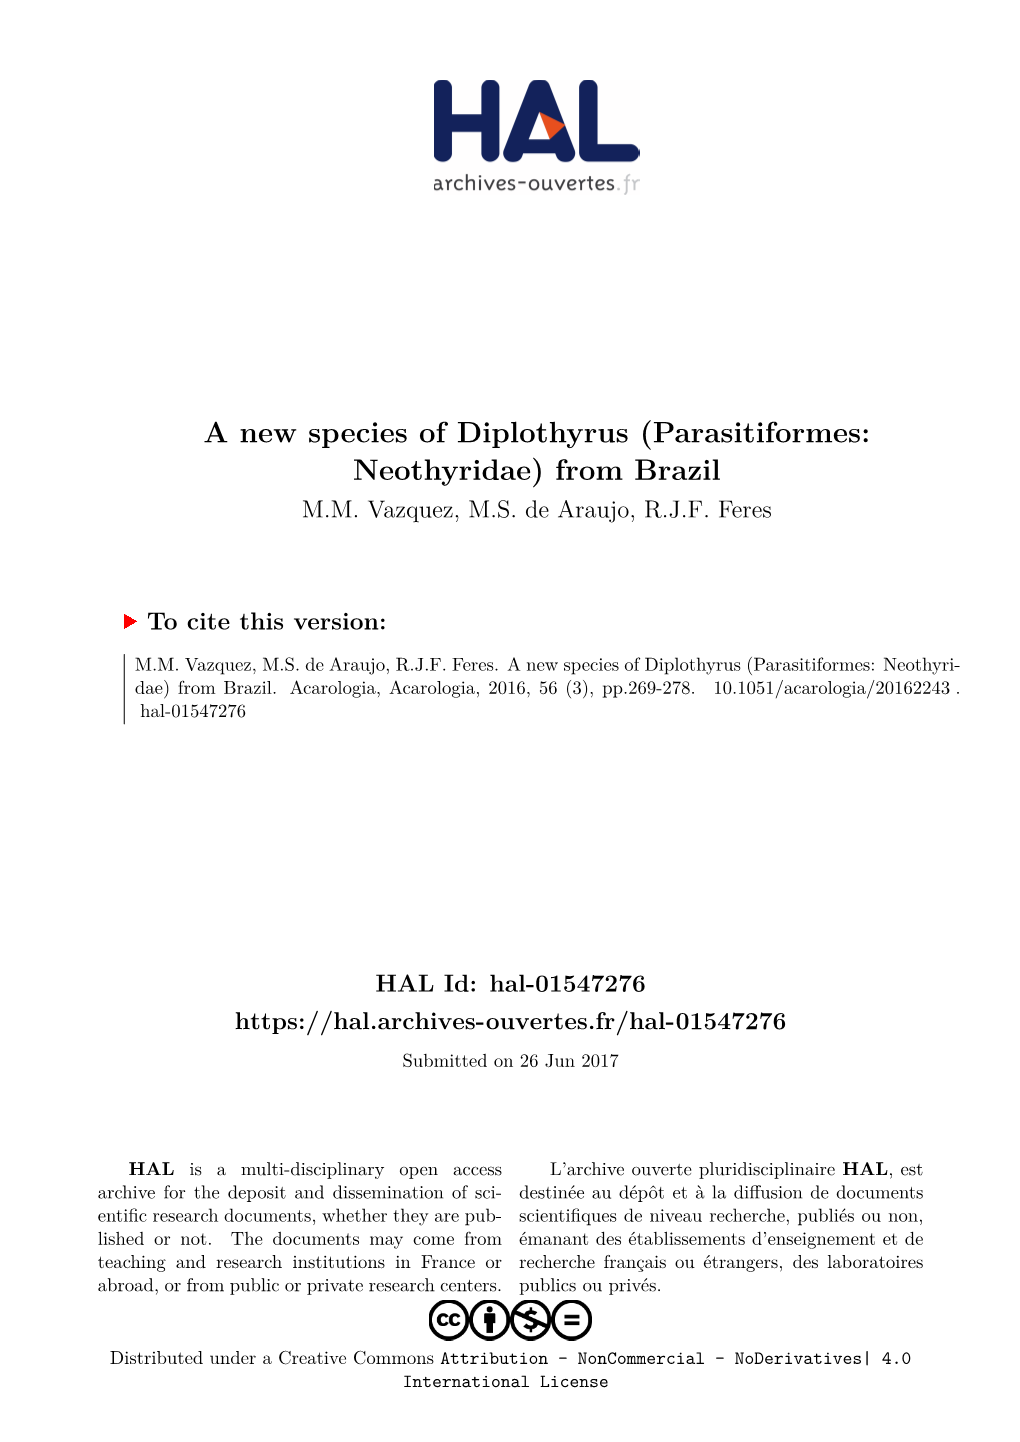 Parasitiformes: Neothyridae) from Brazil M.M